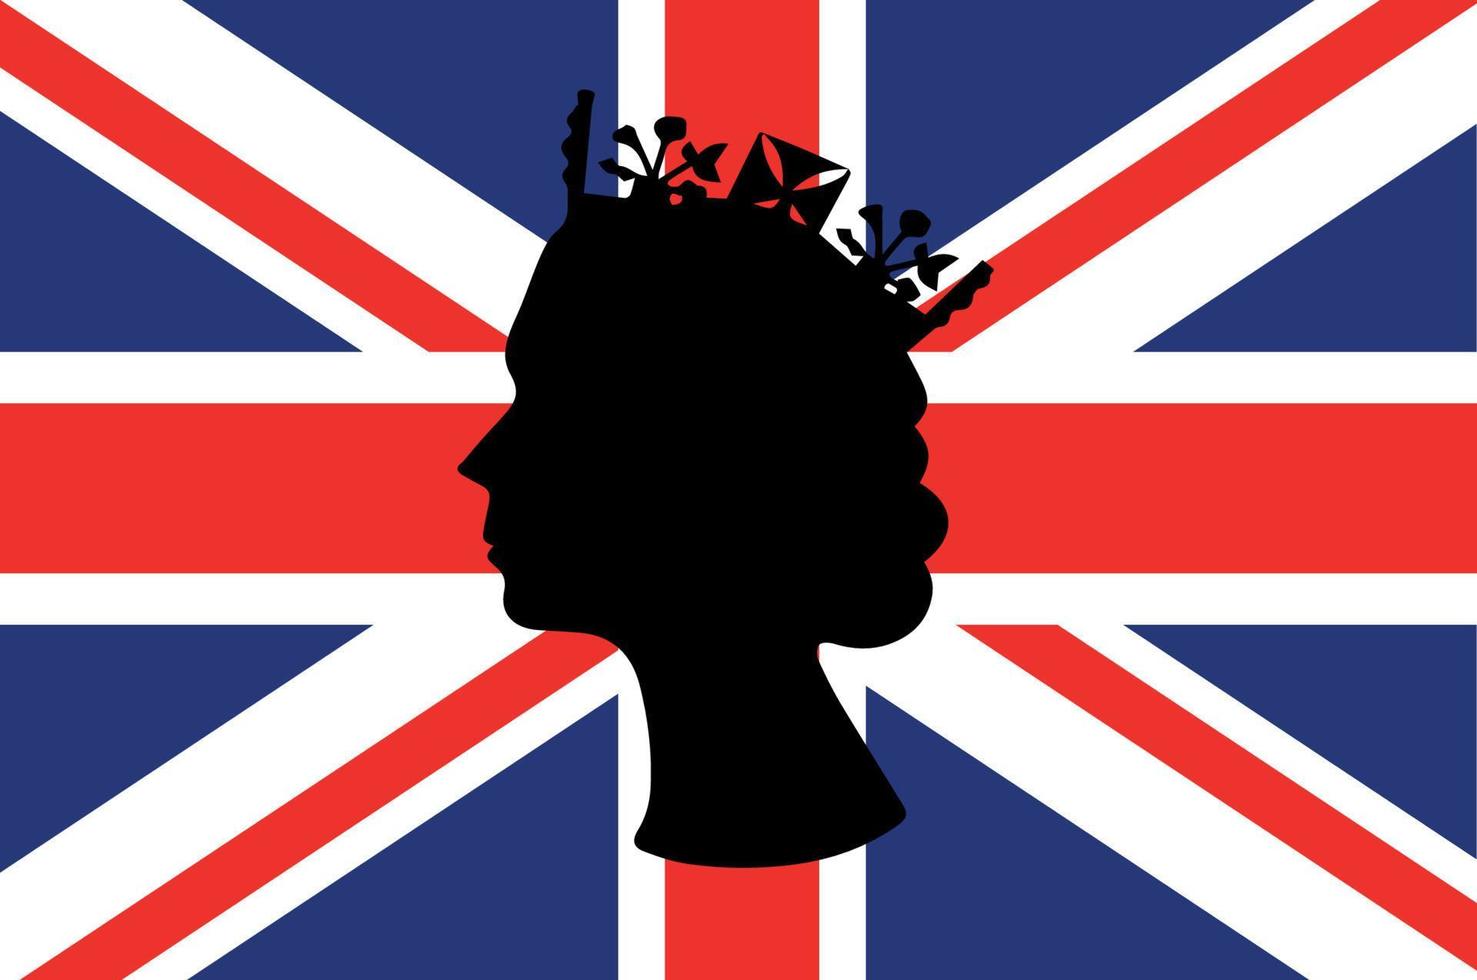 Elizabeth Queen Face Black With British United Kingdom Flag National Europe Emblem Icon Vector Illustration Abstract Design Element